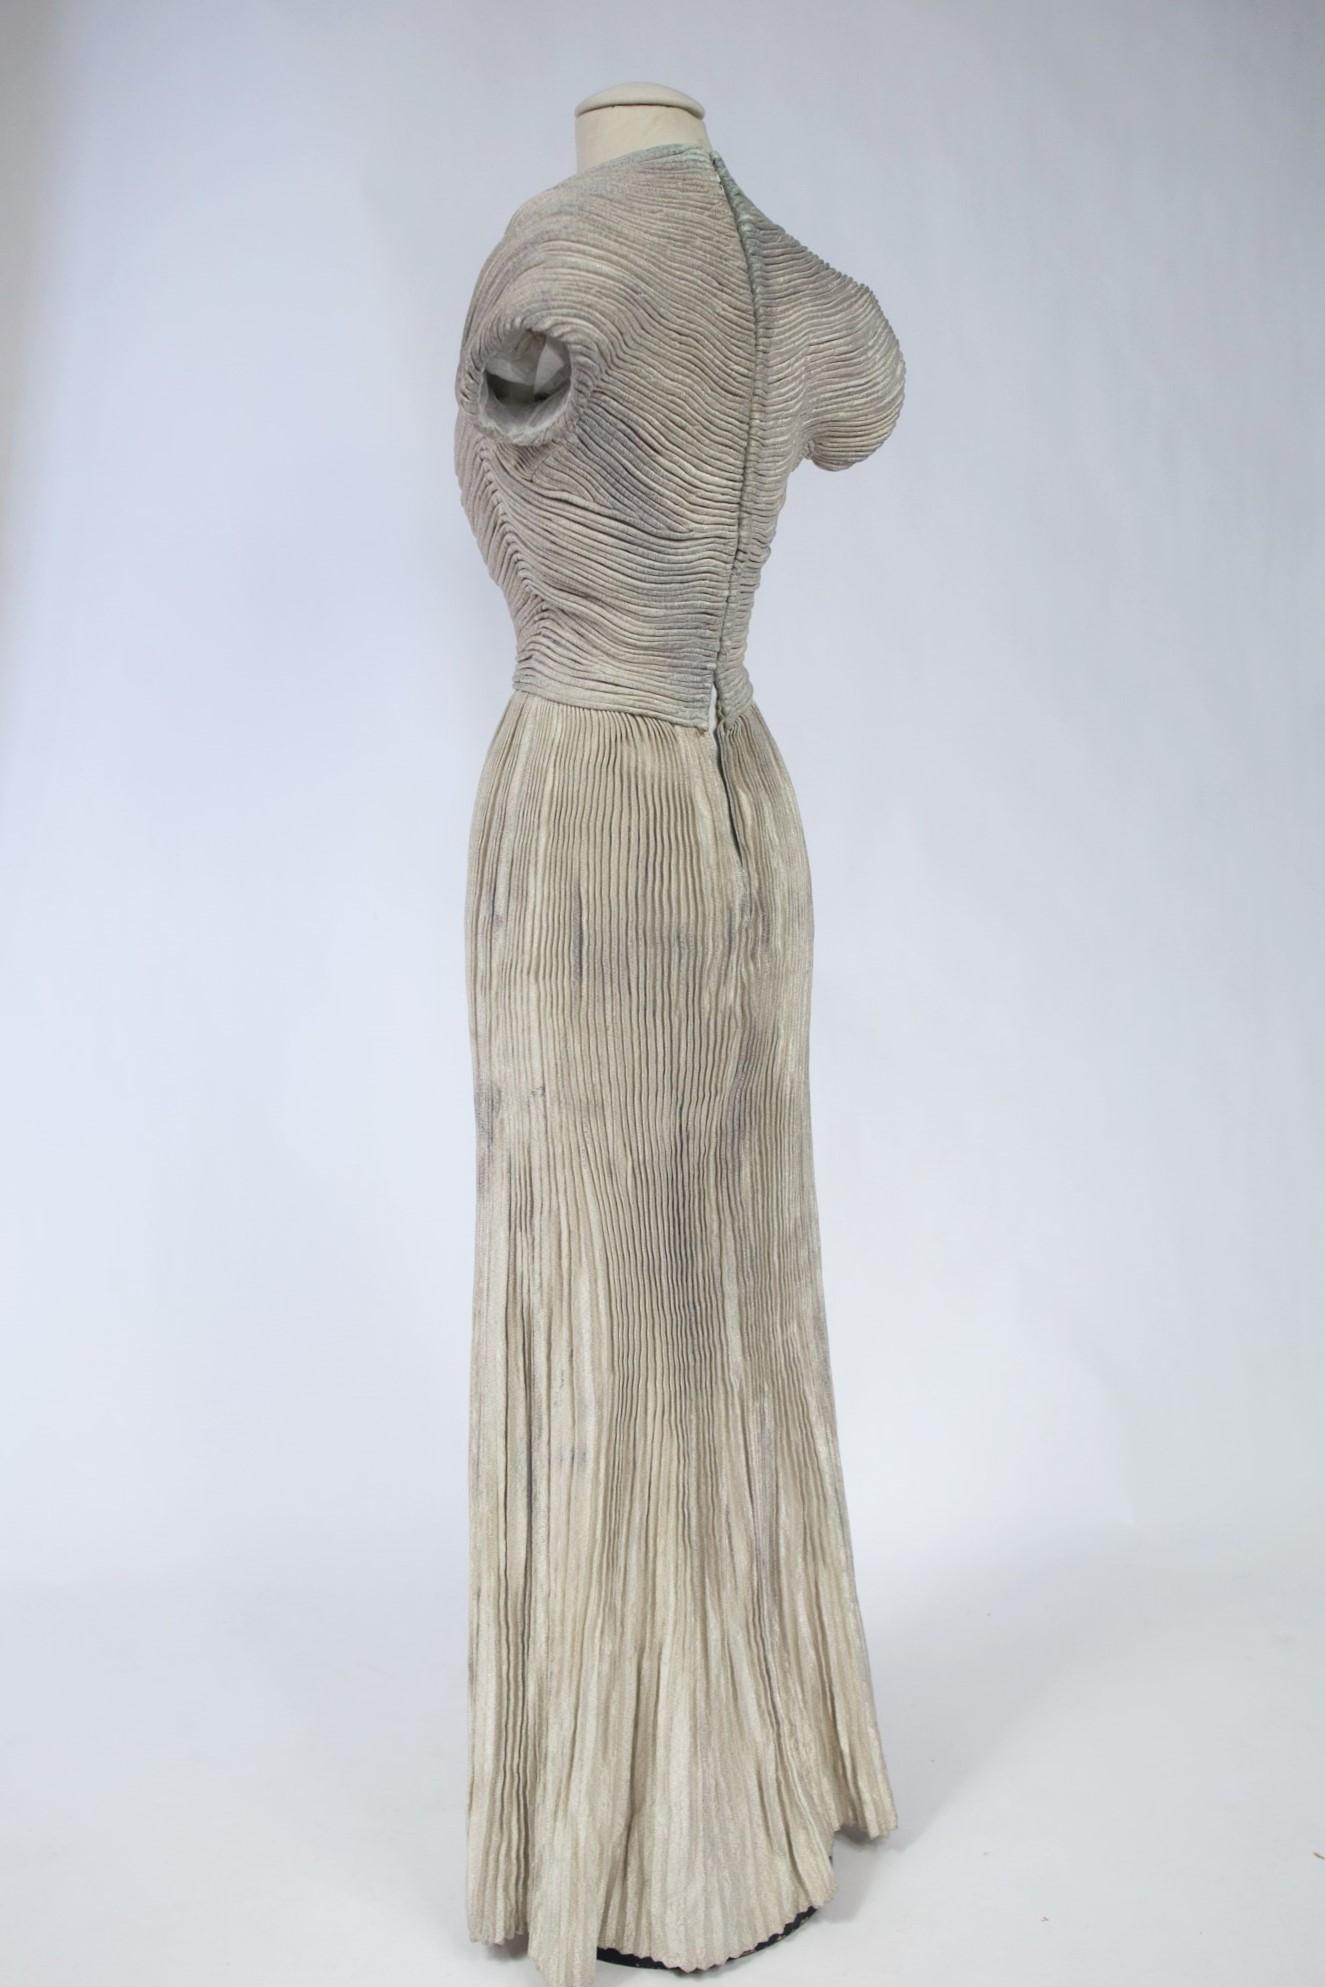 A Silver Lamé Evening Dress by Lucile Manguin - France Haute Couture Circa 1940 3